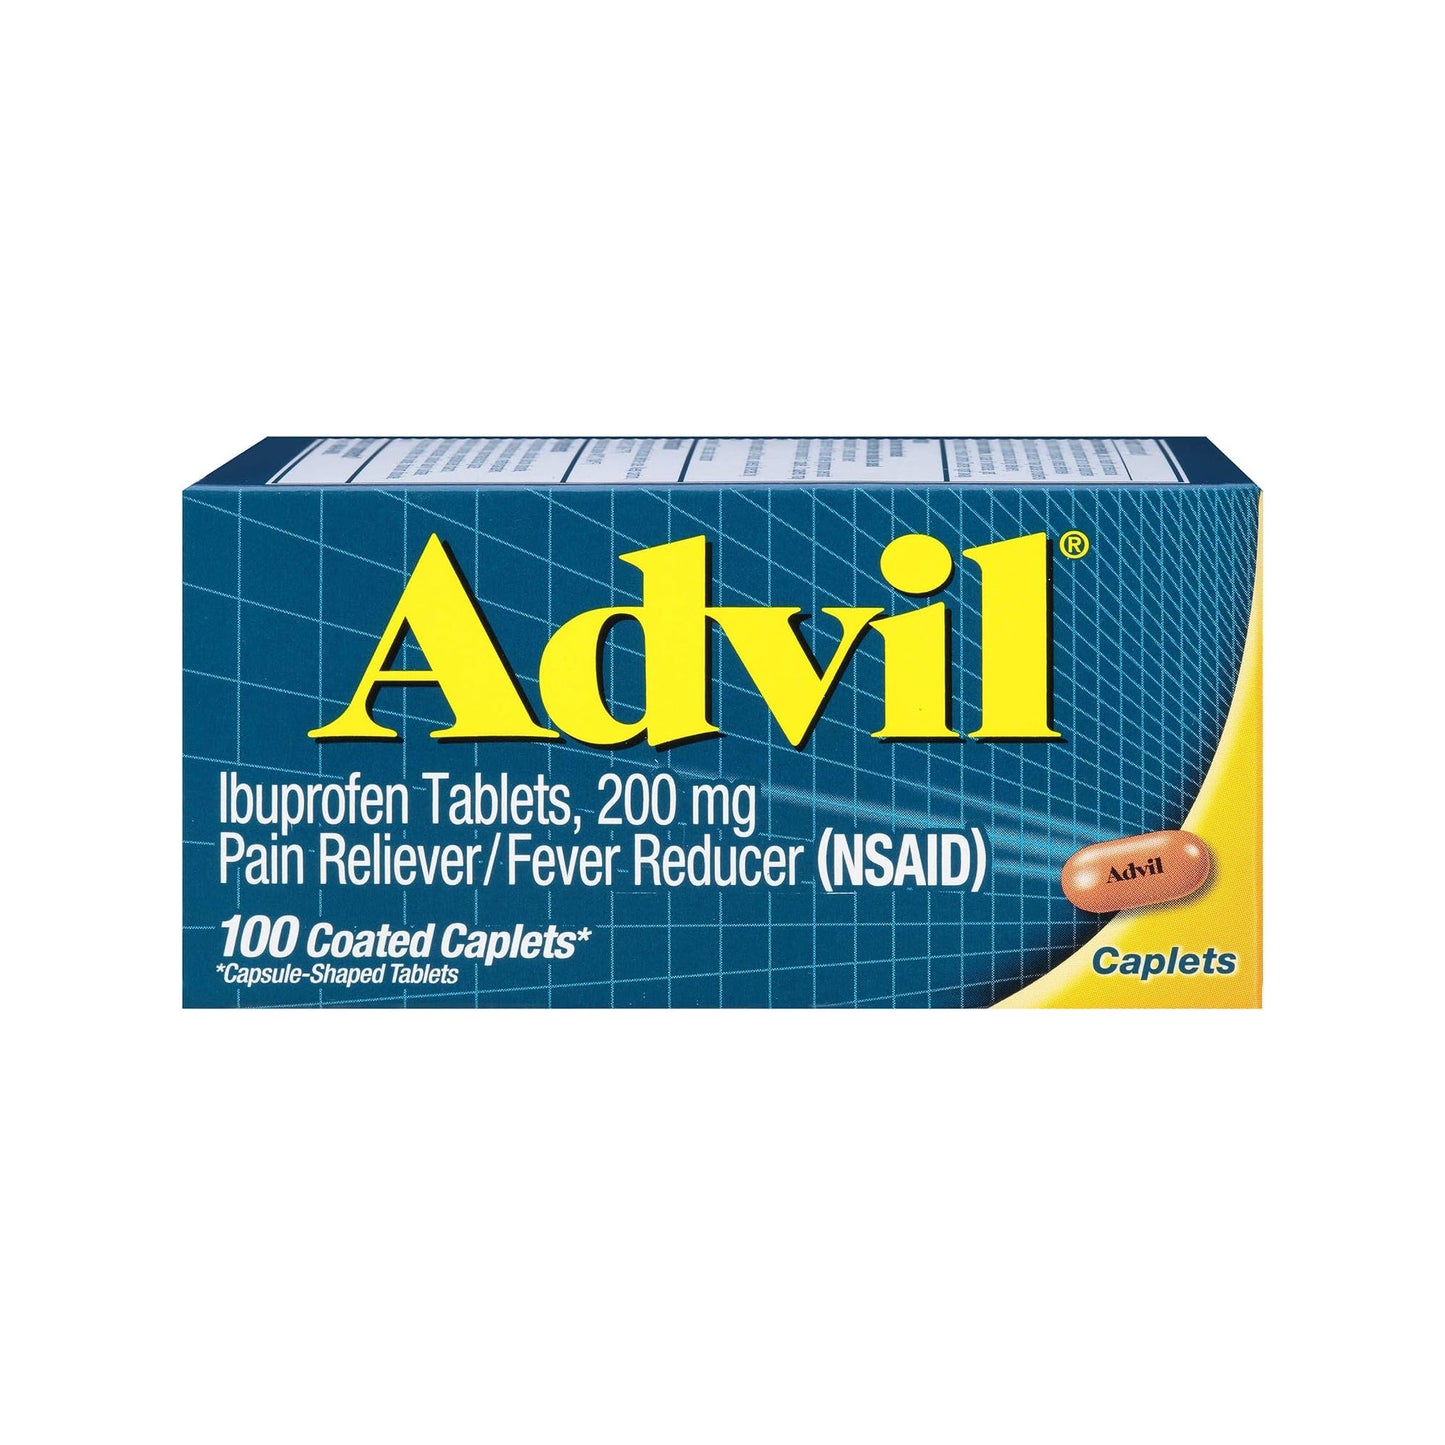 Advil Pain Relief 200 mg Strength Ibuprofen Caplet, 100 ct